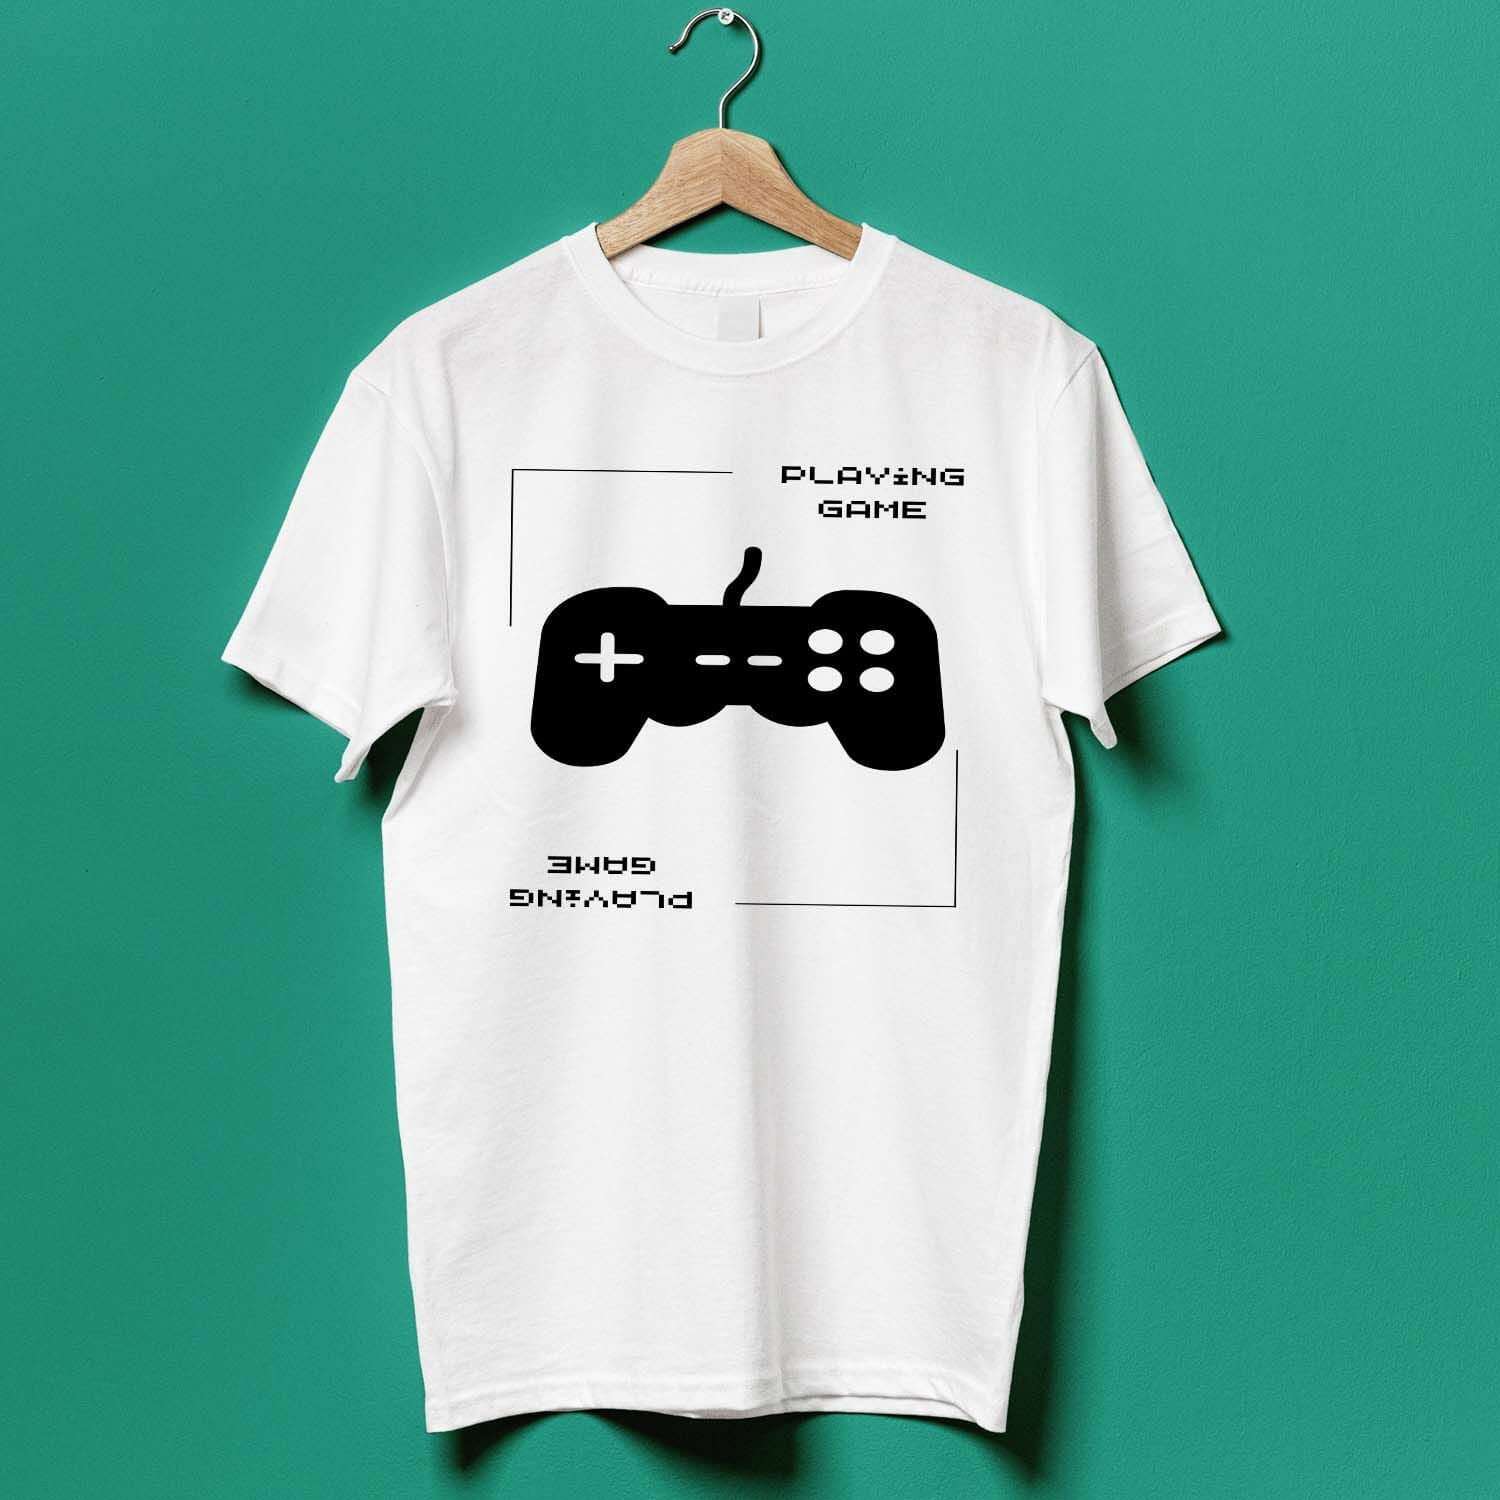 Playing Games t-shirt design